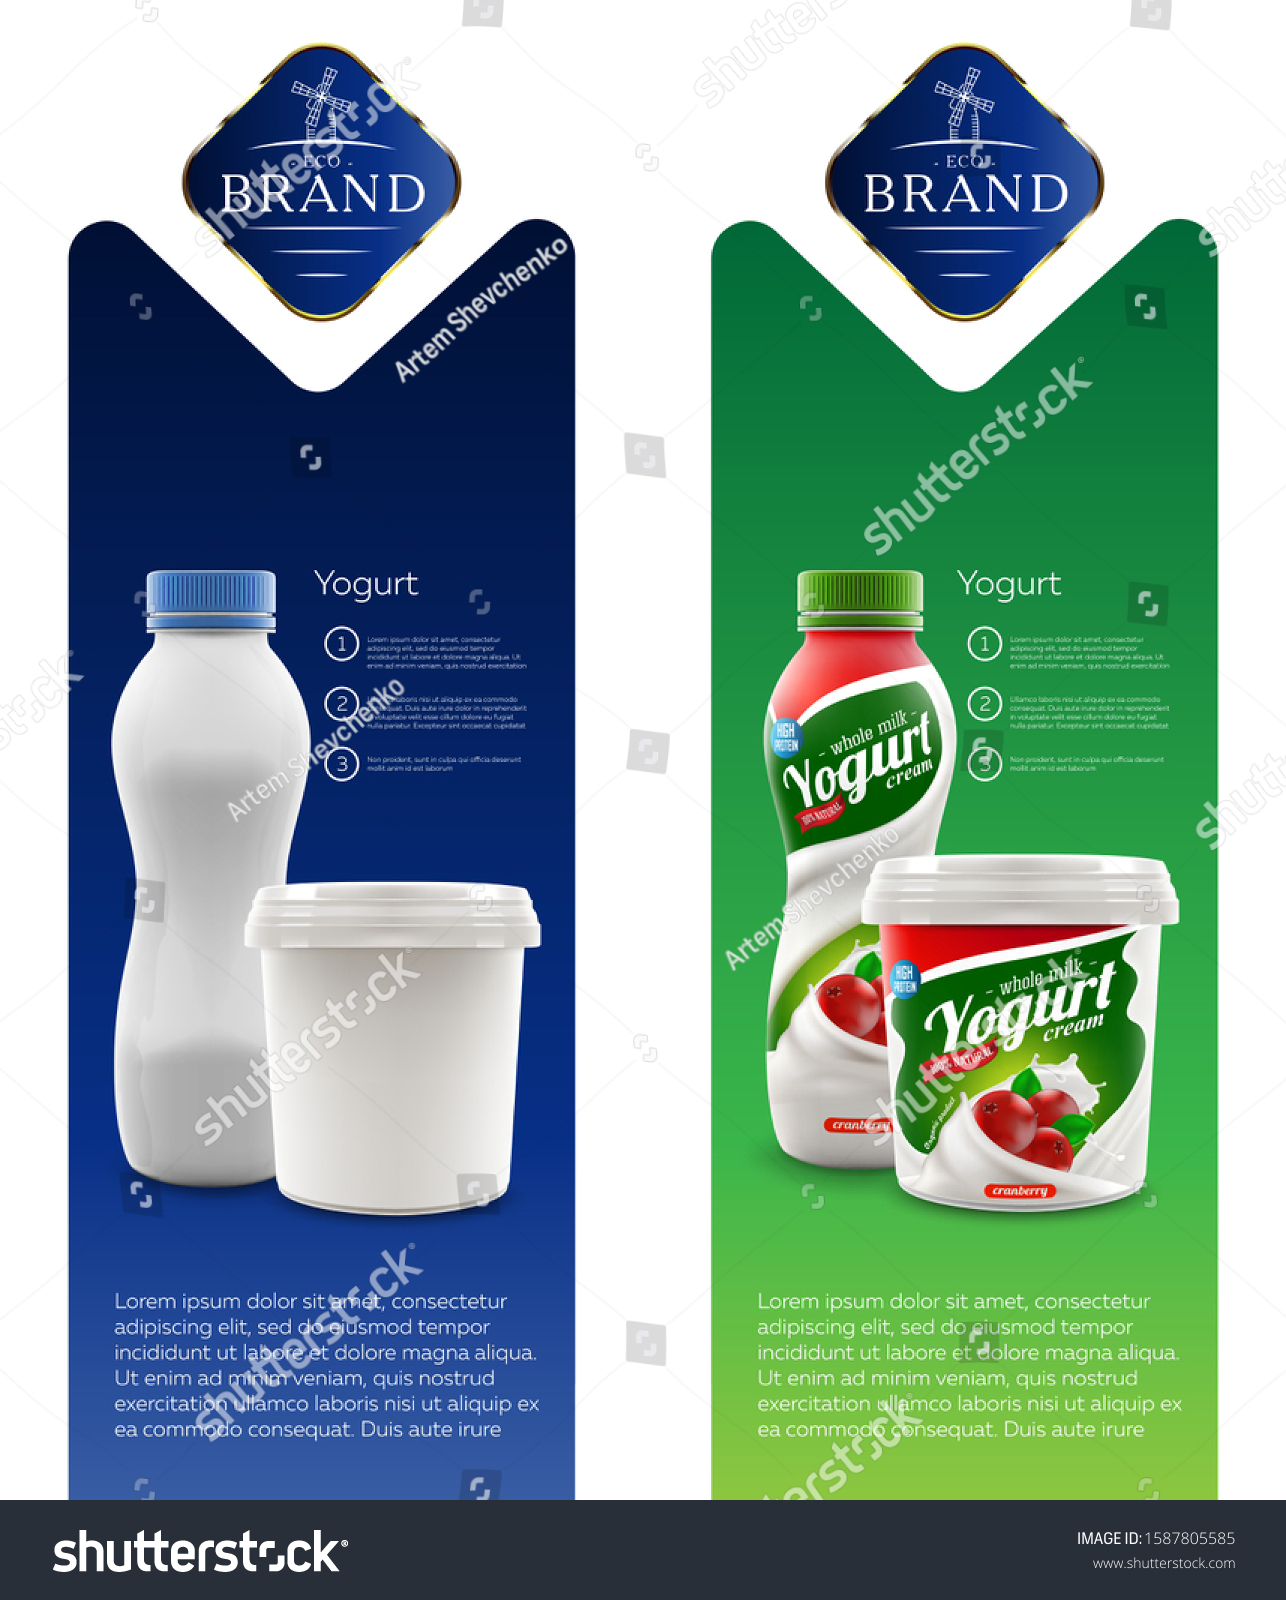 Yogurt Brand New Ad Flyer Design Stock Vector Royalty Free